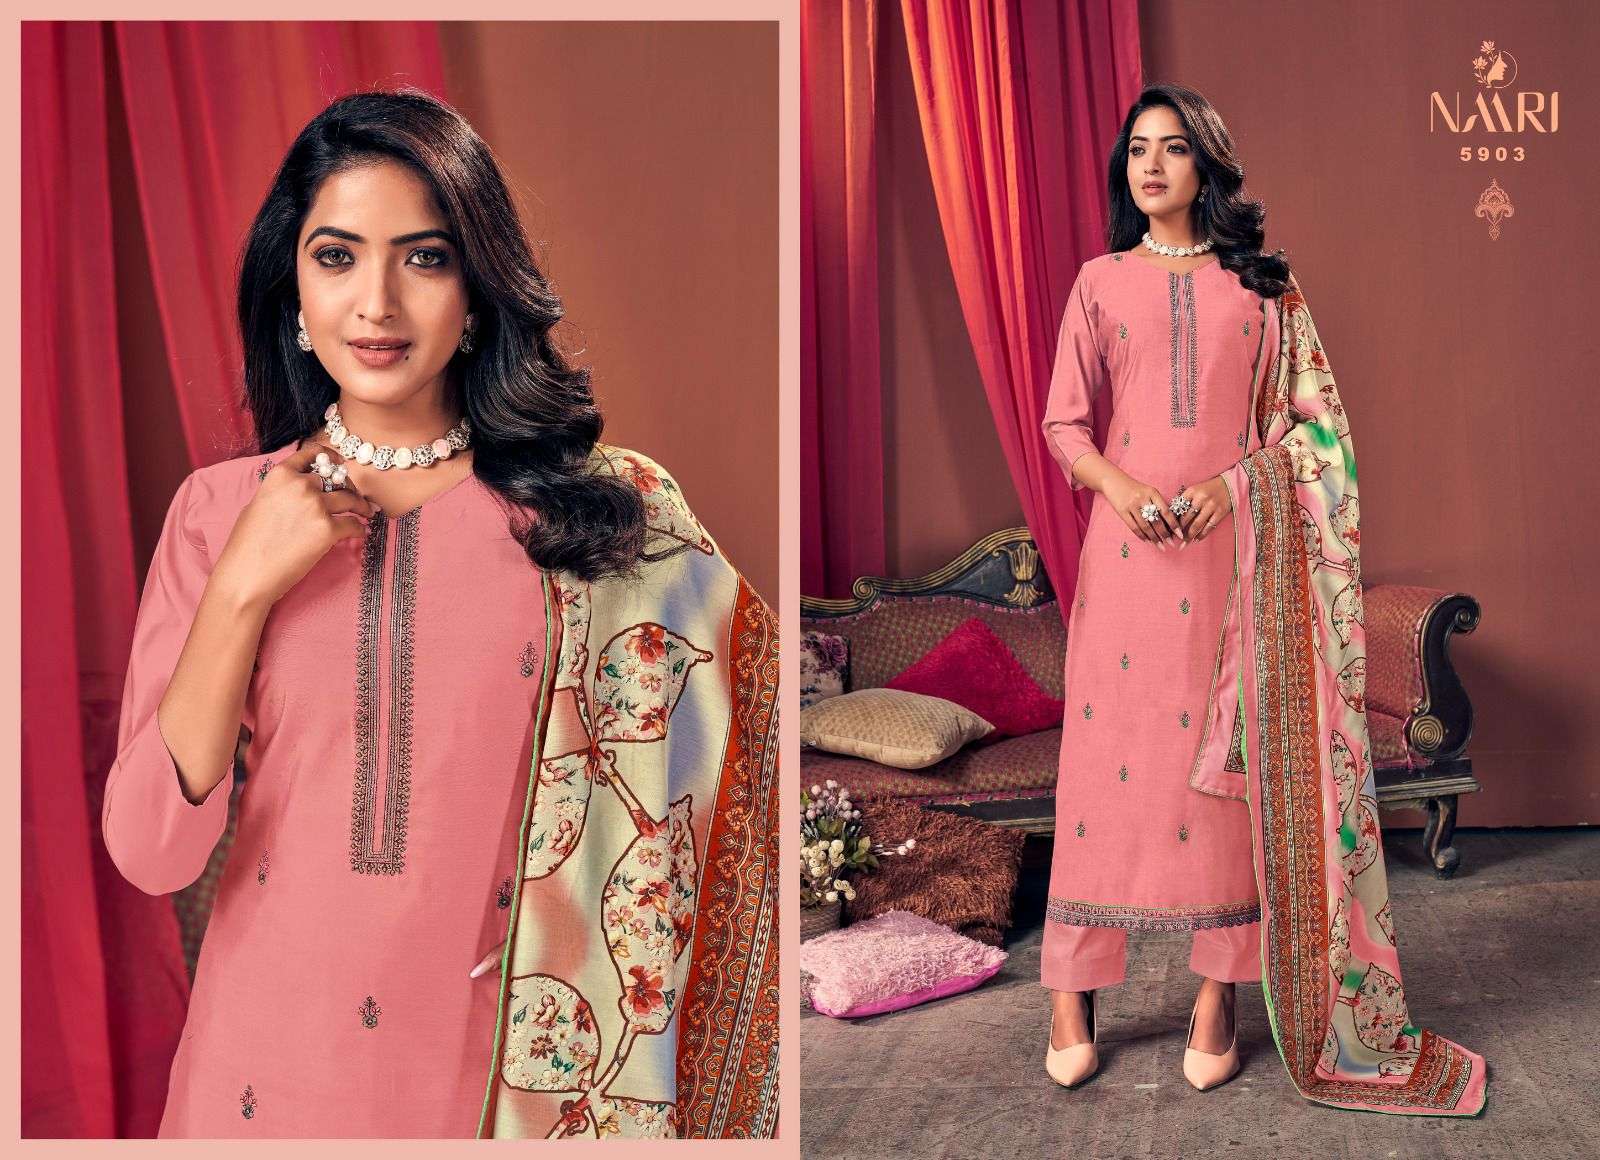 naari elahi 5901-5904 series exclusive designer salwar suits catalogue collection 2023 